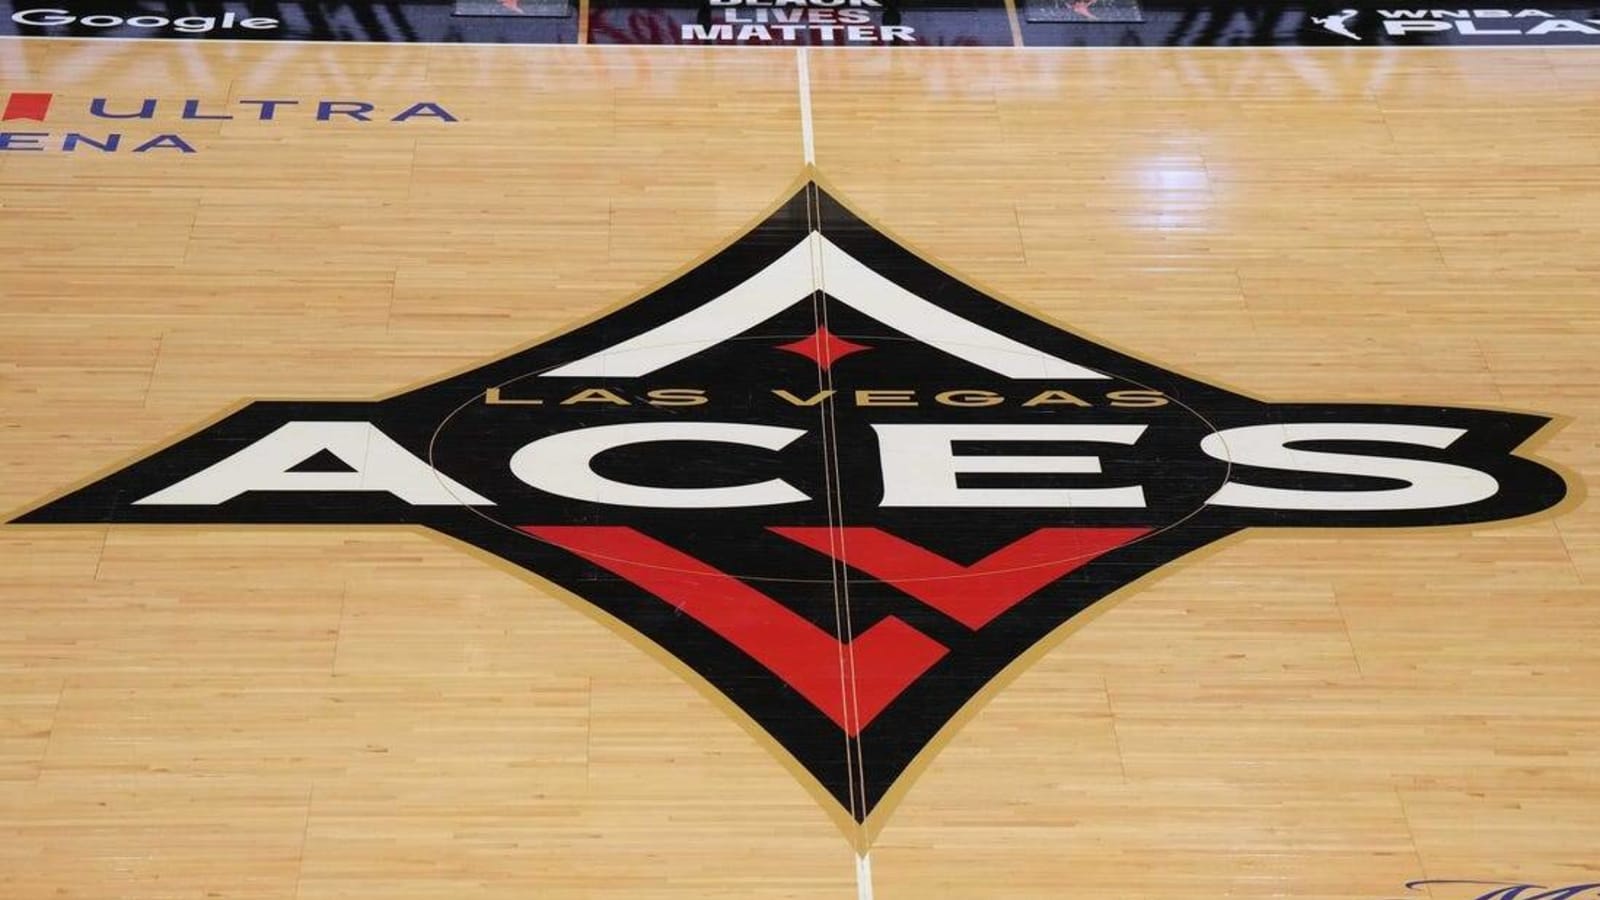 Report: Aces&#39; sponsorship deal under investigation